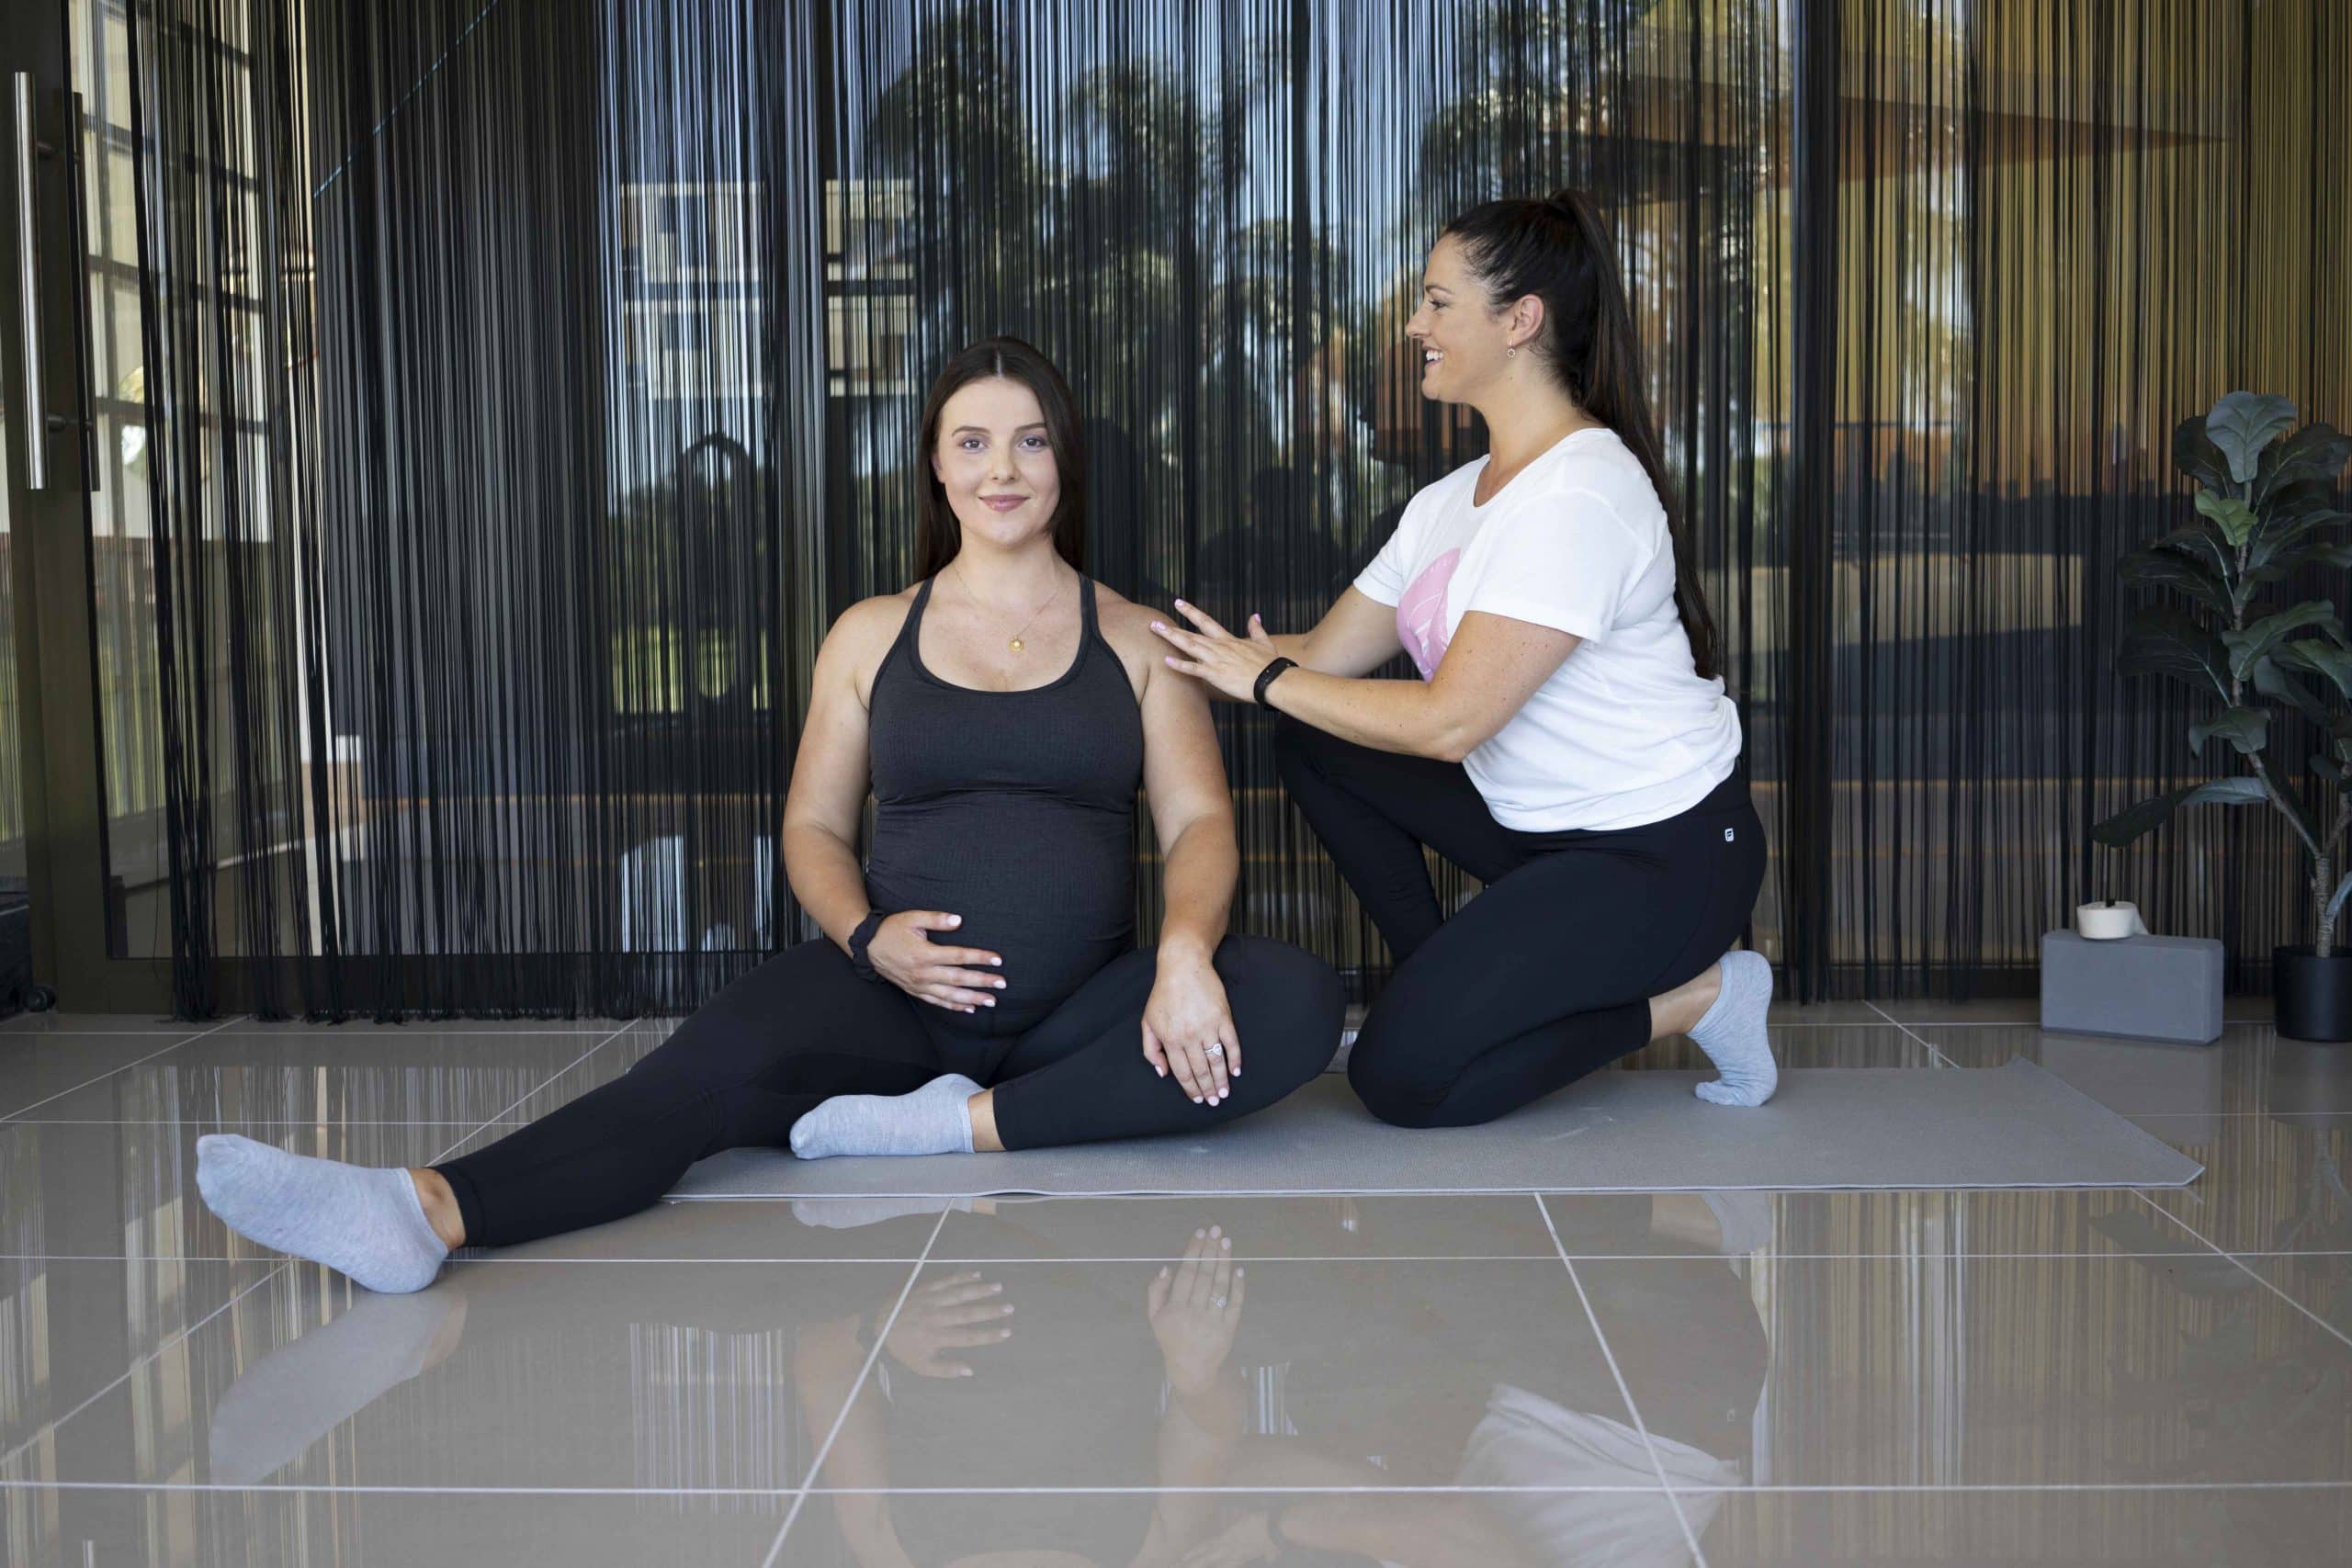 Pelvic floor exercises for pregnancy routine with physiotherapist Melanie Platt